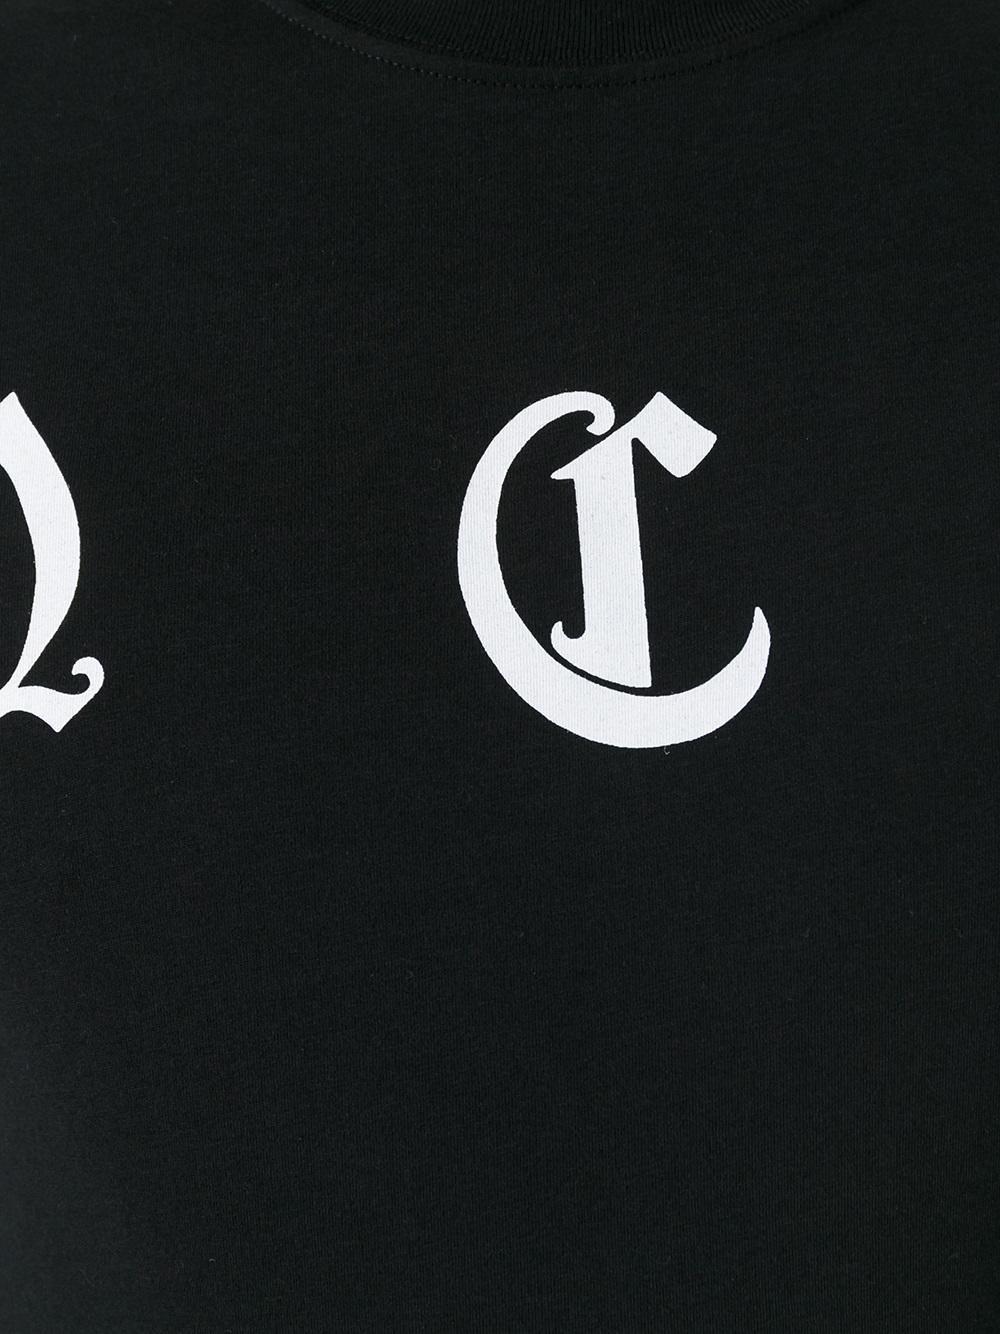 Lyst - Mcq Goth Logo T-shirt in Black for Men